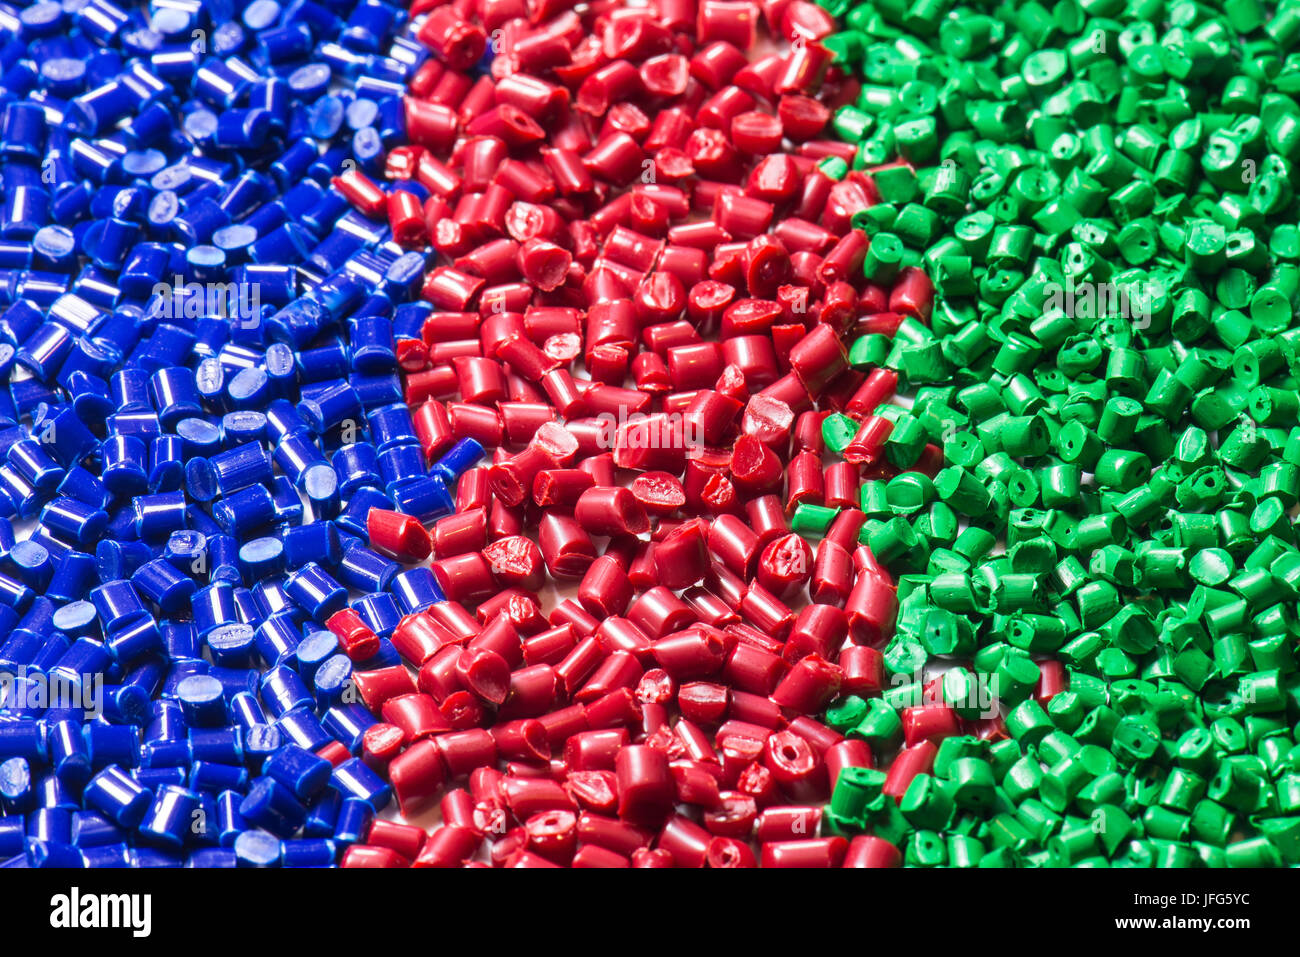 blue-red-green polymer granulats Stock Photo